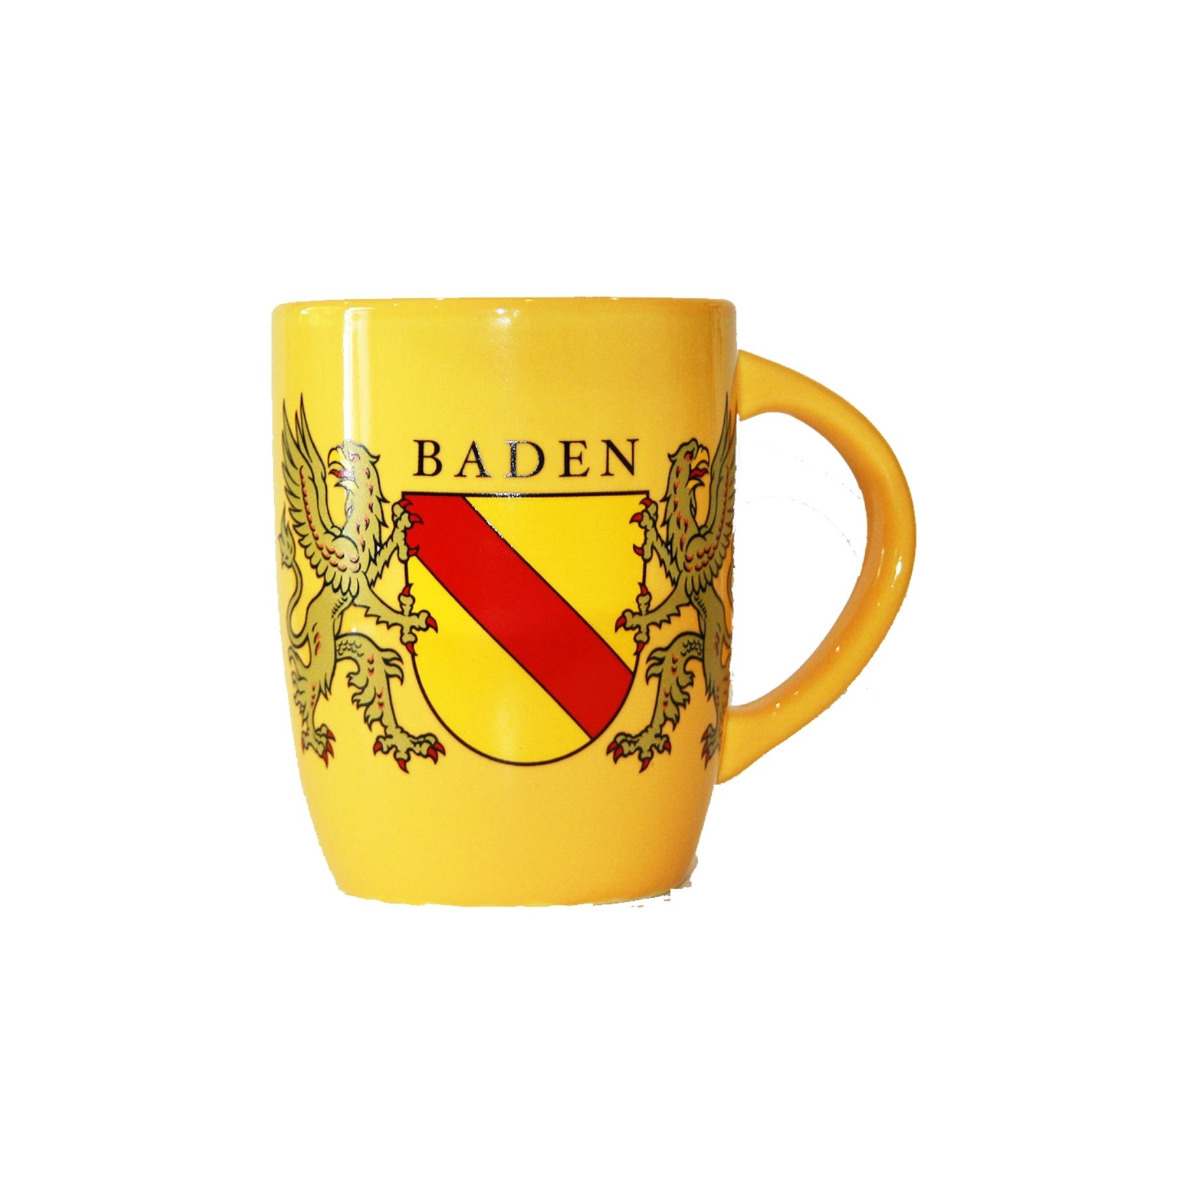 Kaffeetasse "Baden" gelb